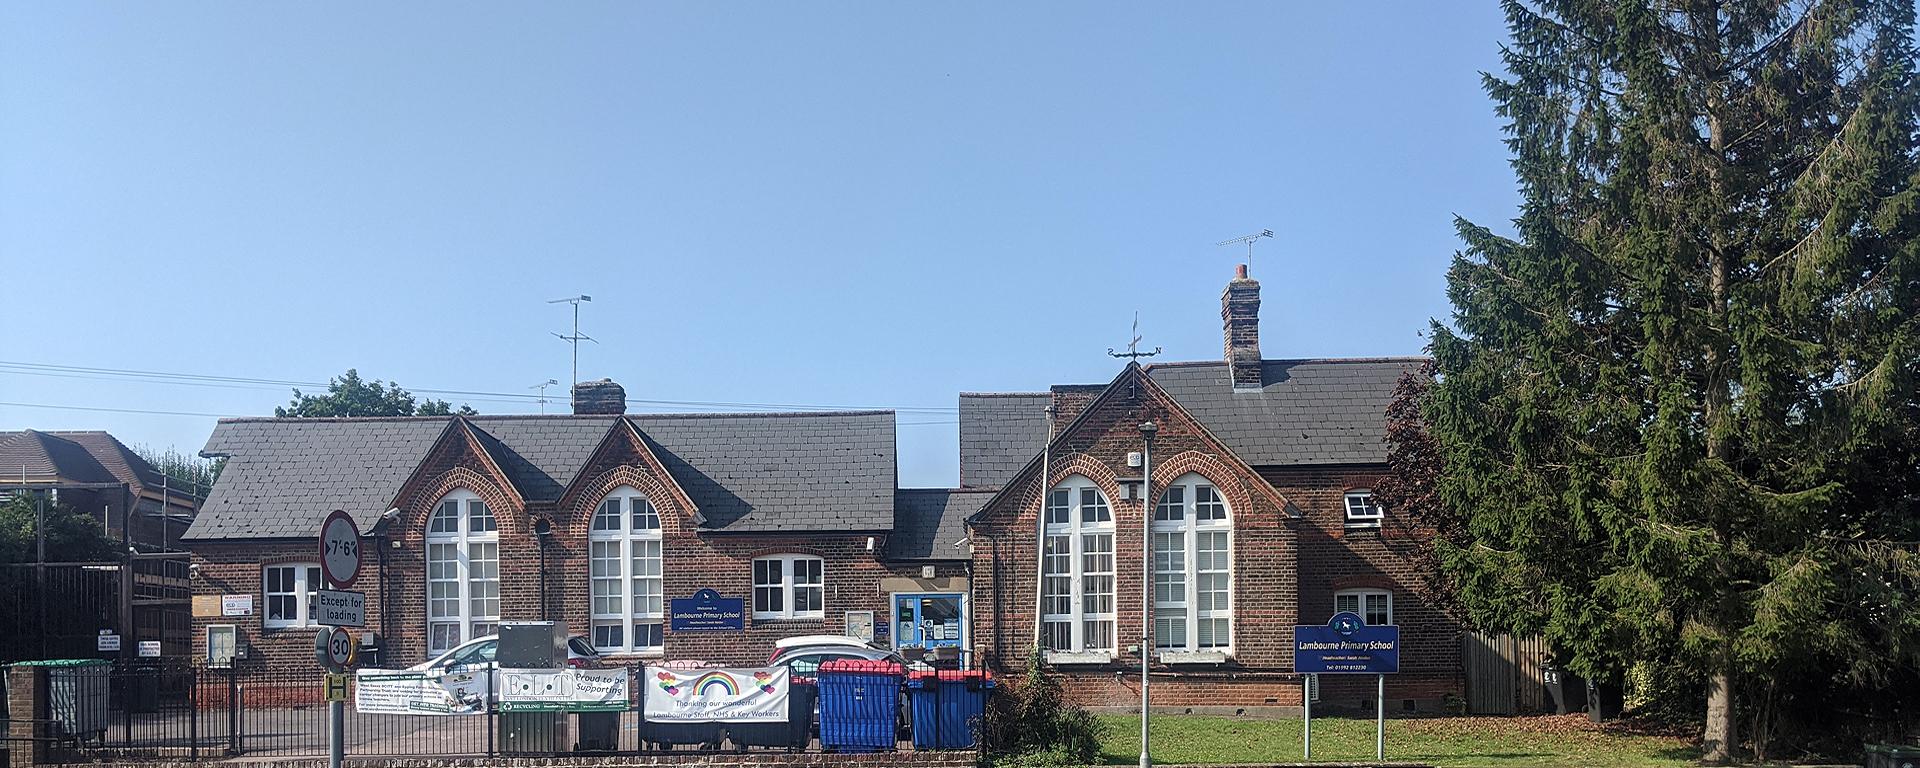 Lambourne Primary School